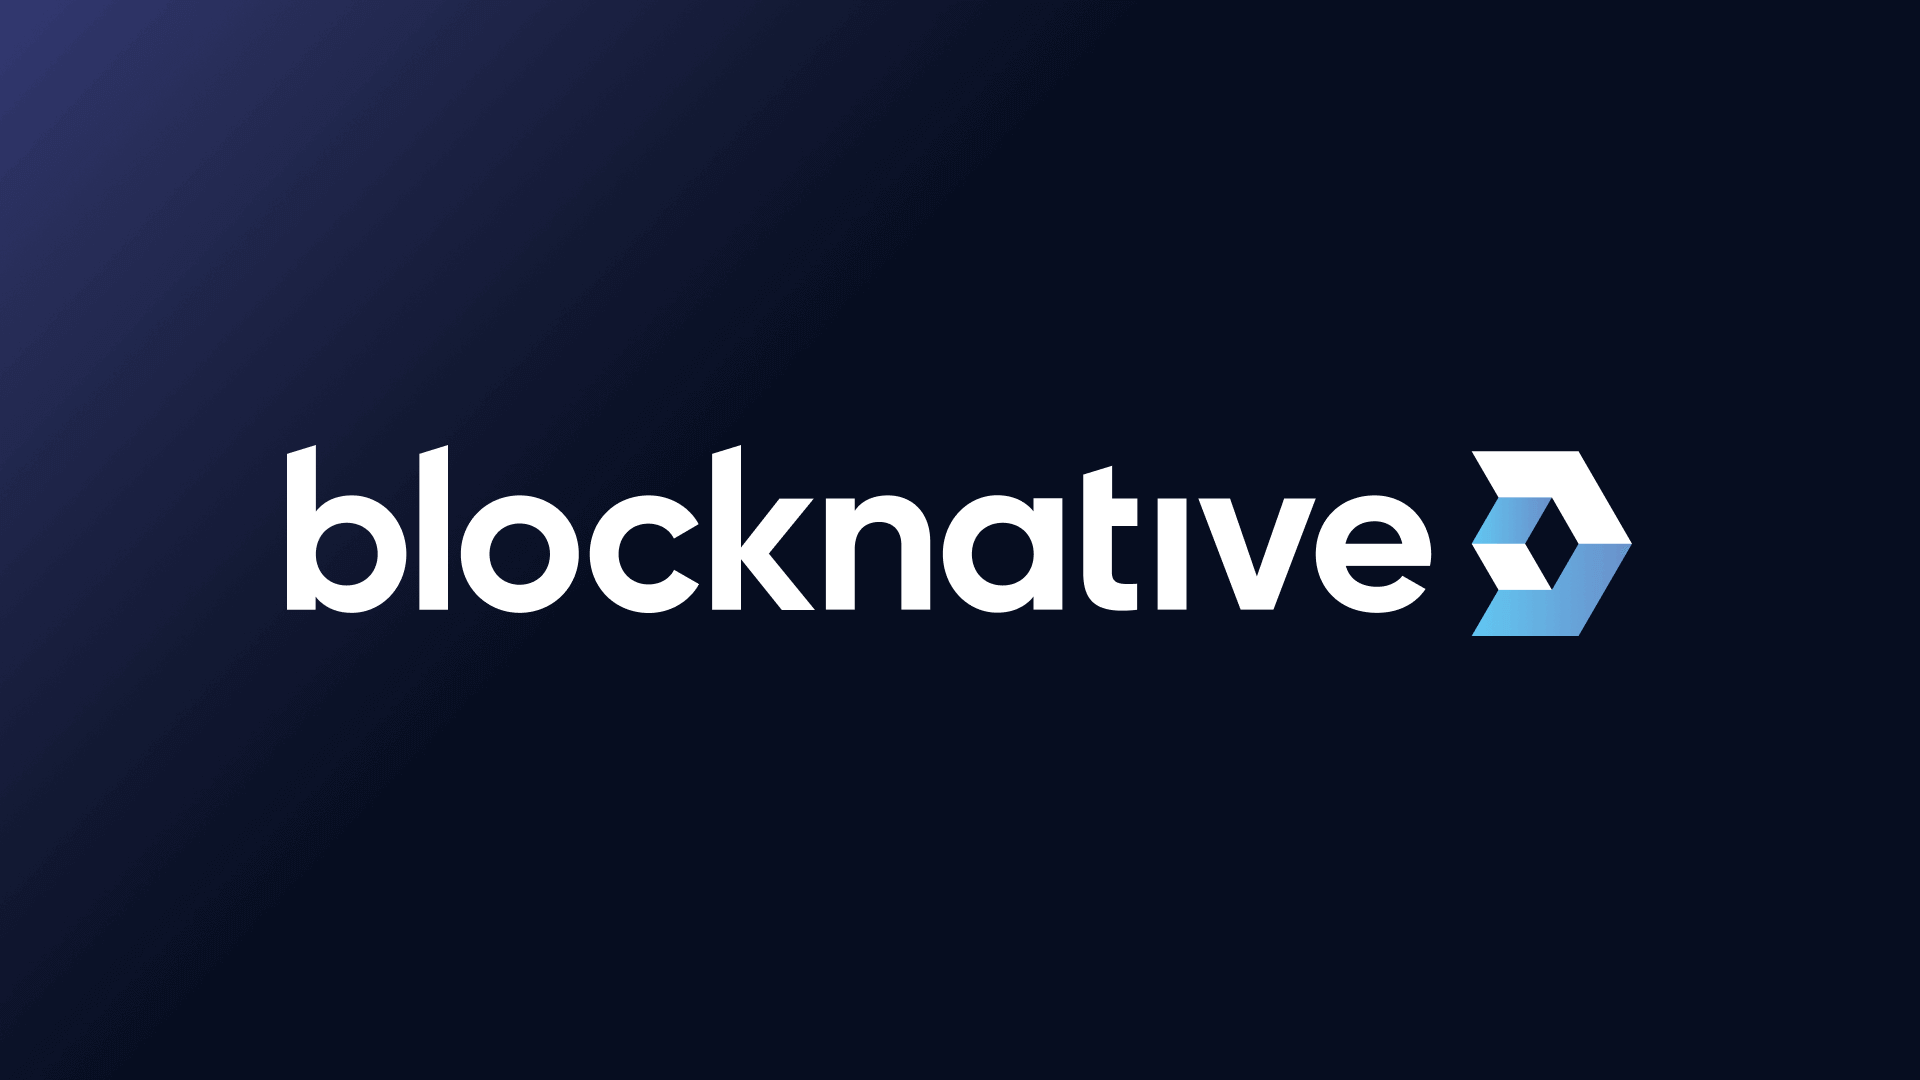 introducing-blocknative’s-new-visual-identity